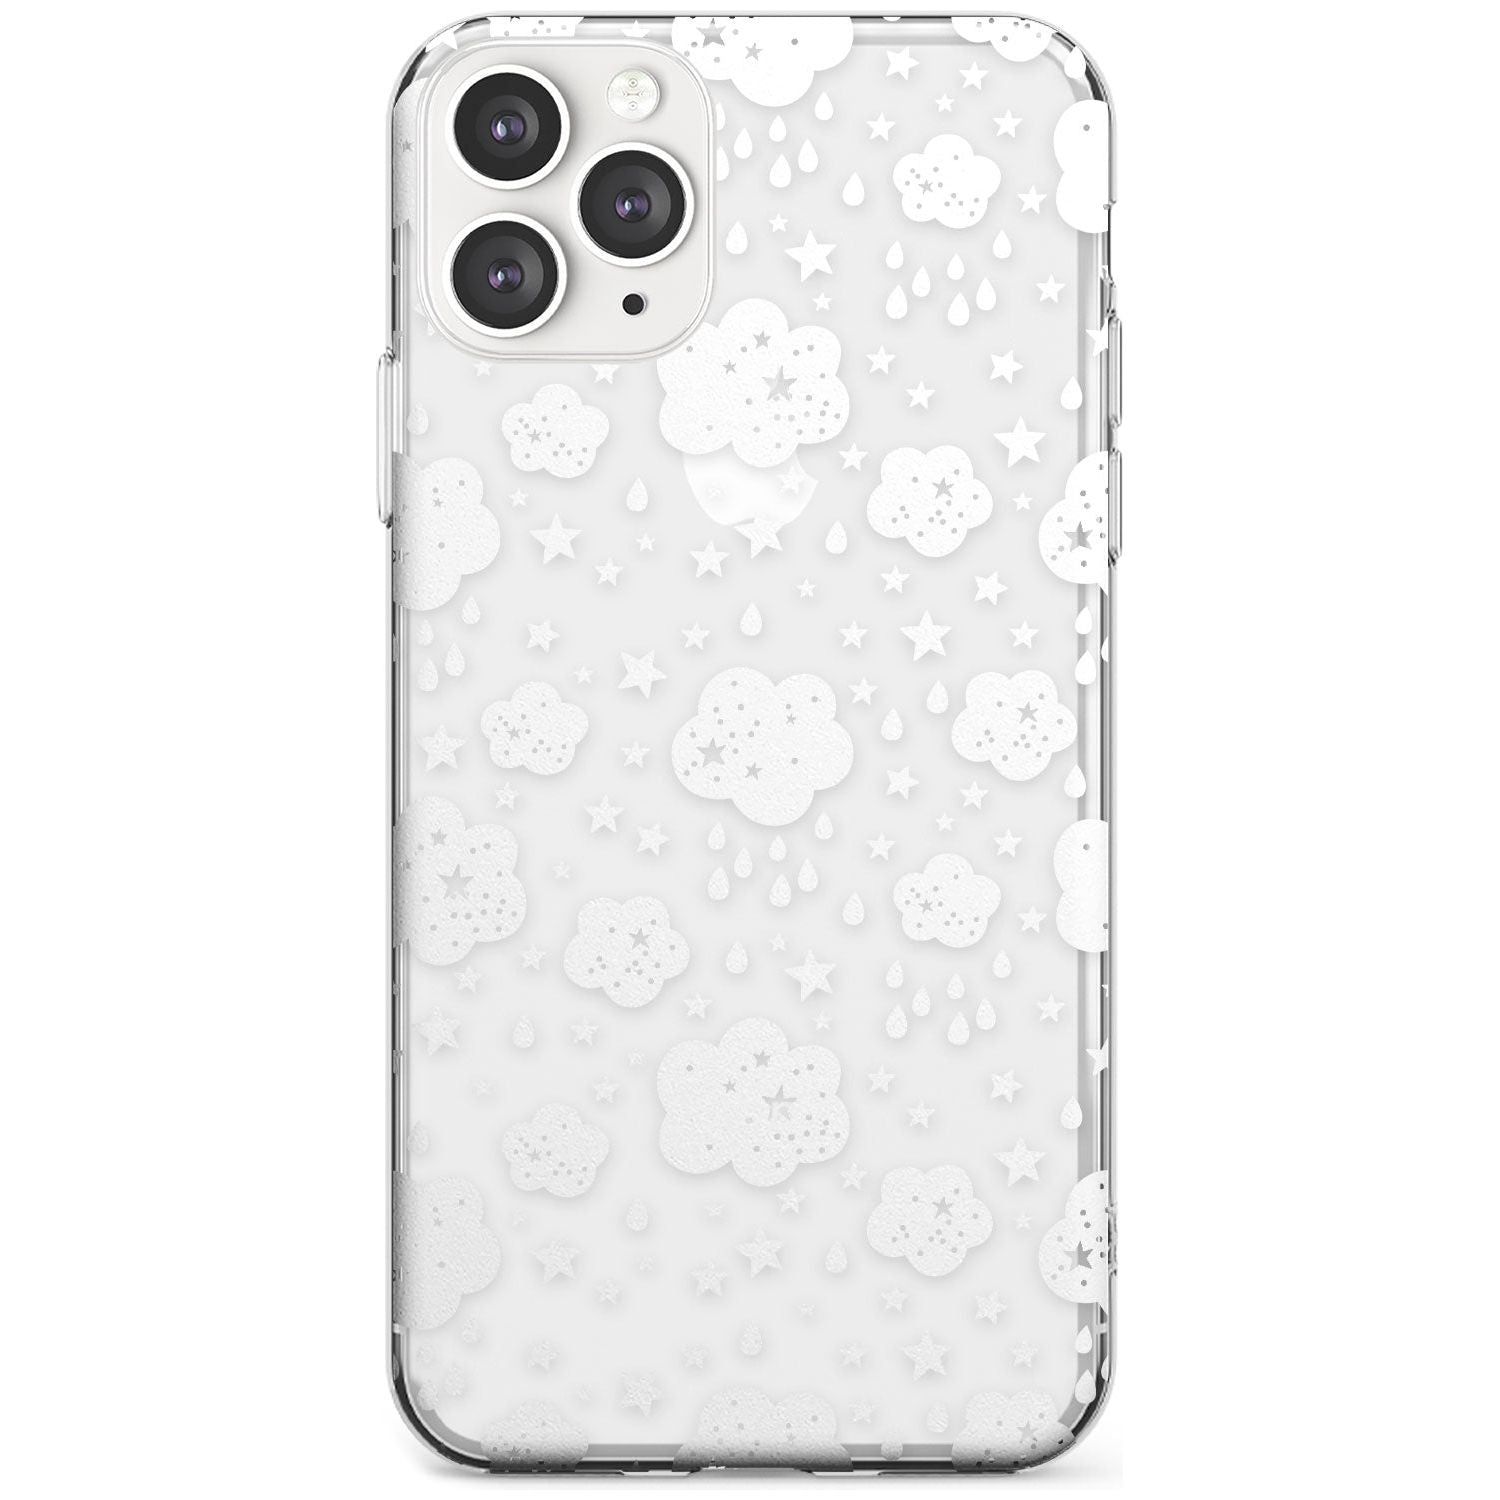 Rainy Days Slim TPU Phone Case for iPhone 11 Pro Max